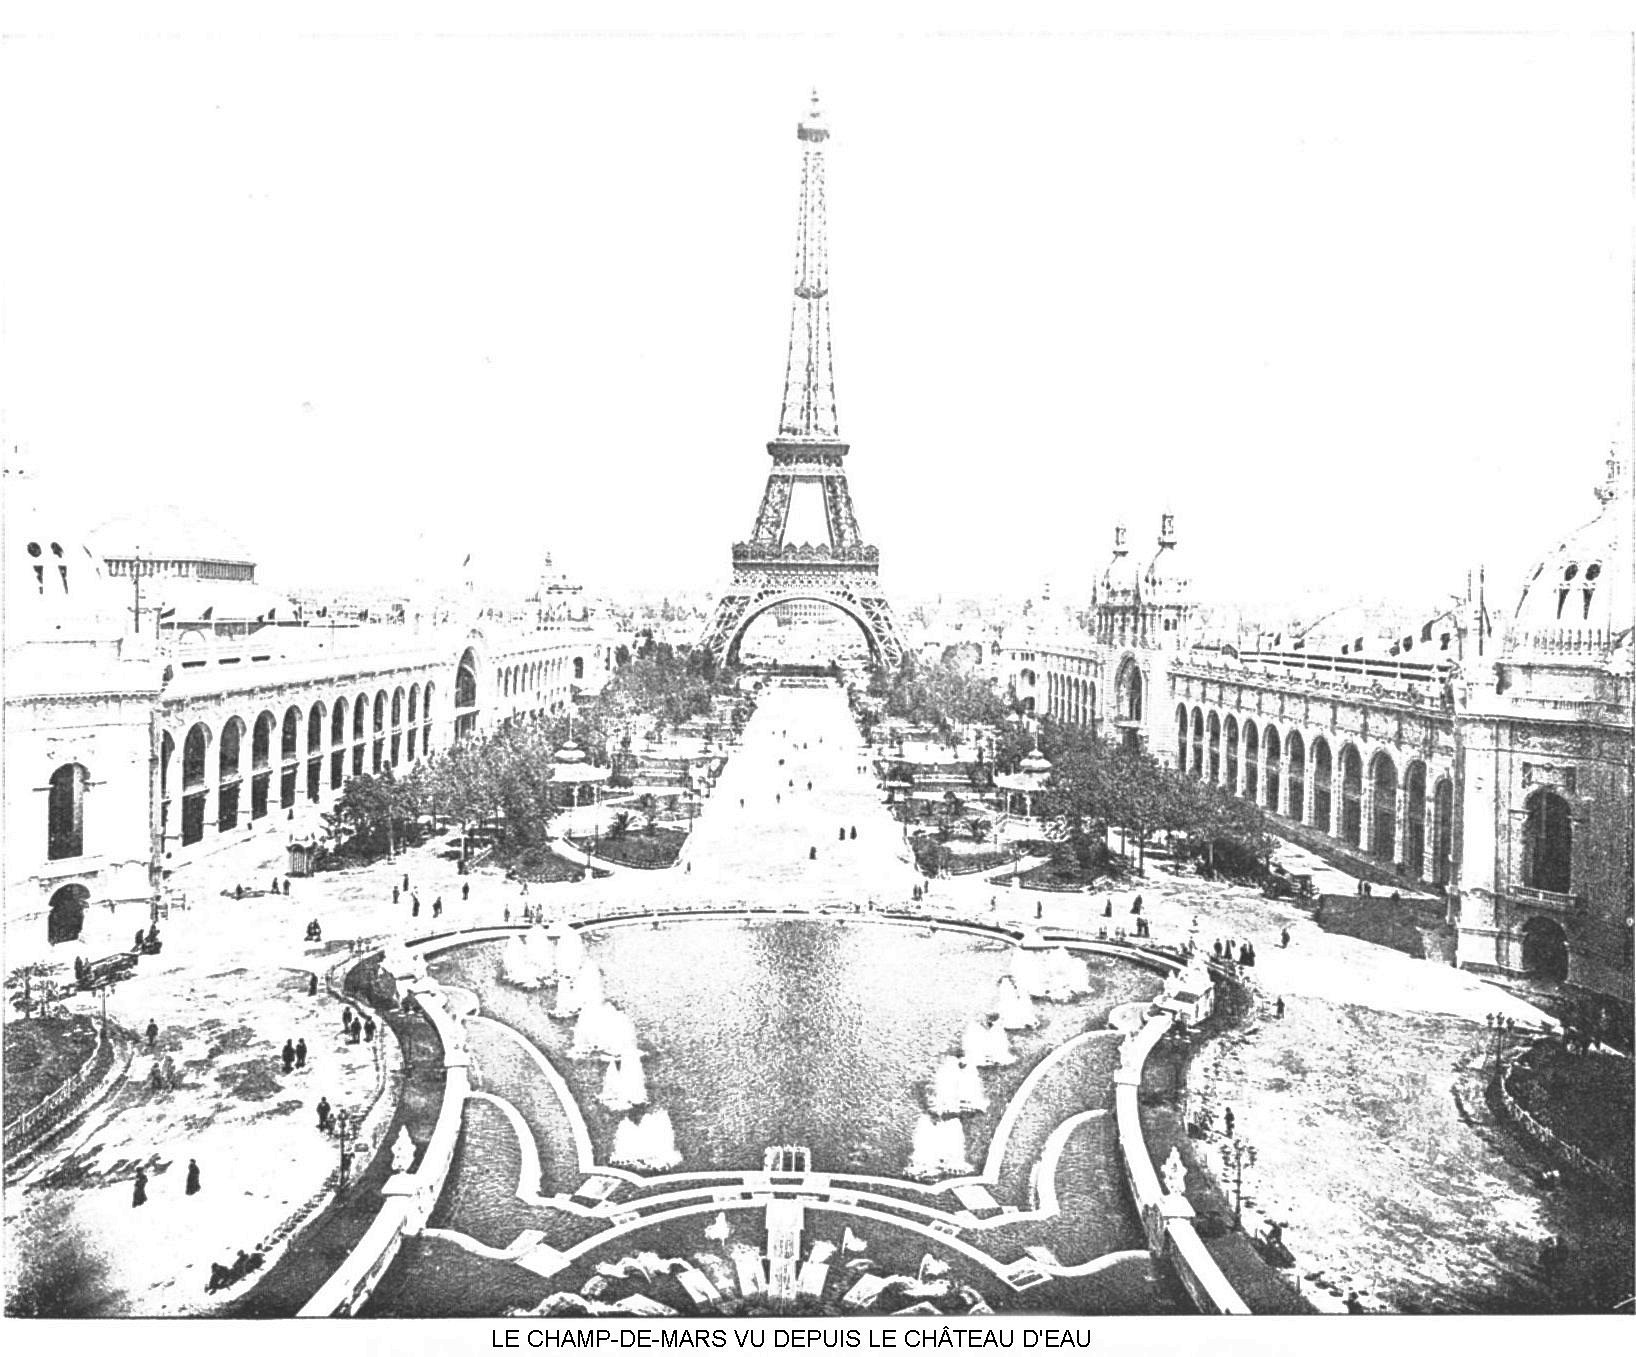 Exposition Universelle 1900 - Exposition Universelle 1900 Le Champ de mars vu depuis el chateau deau.jpg